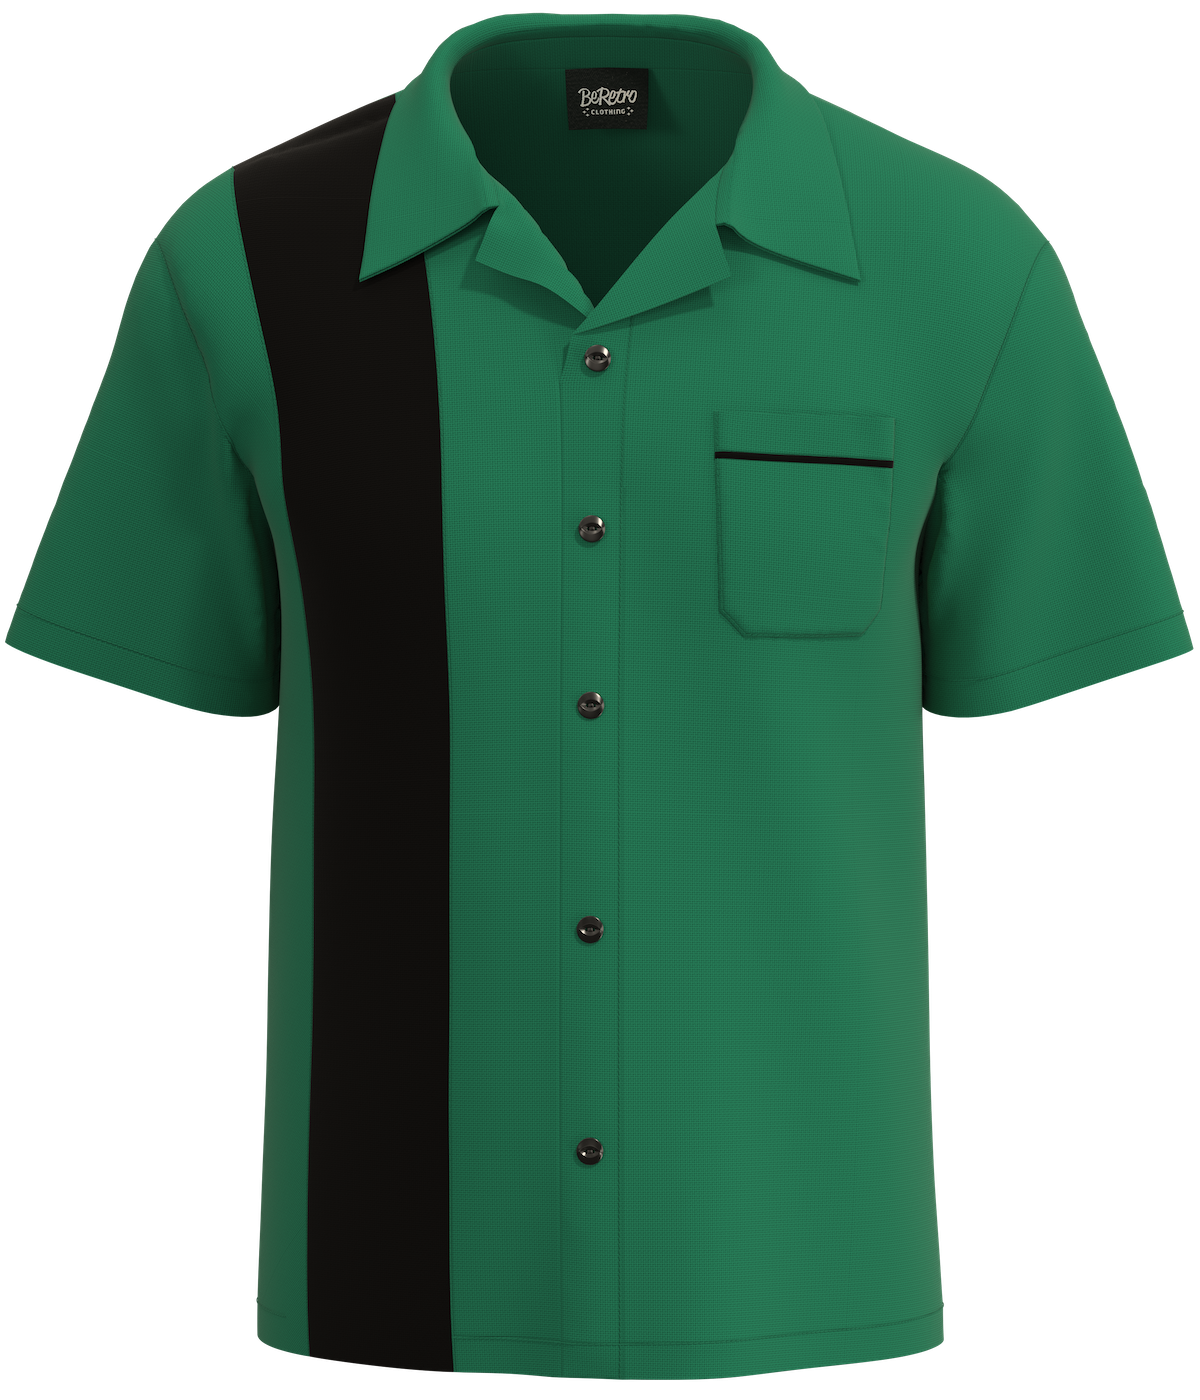 Green Bowling Shirt | Pool Team Shirt | BeRetro